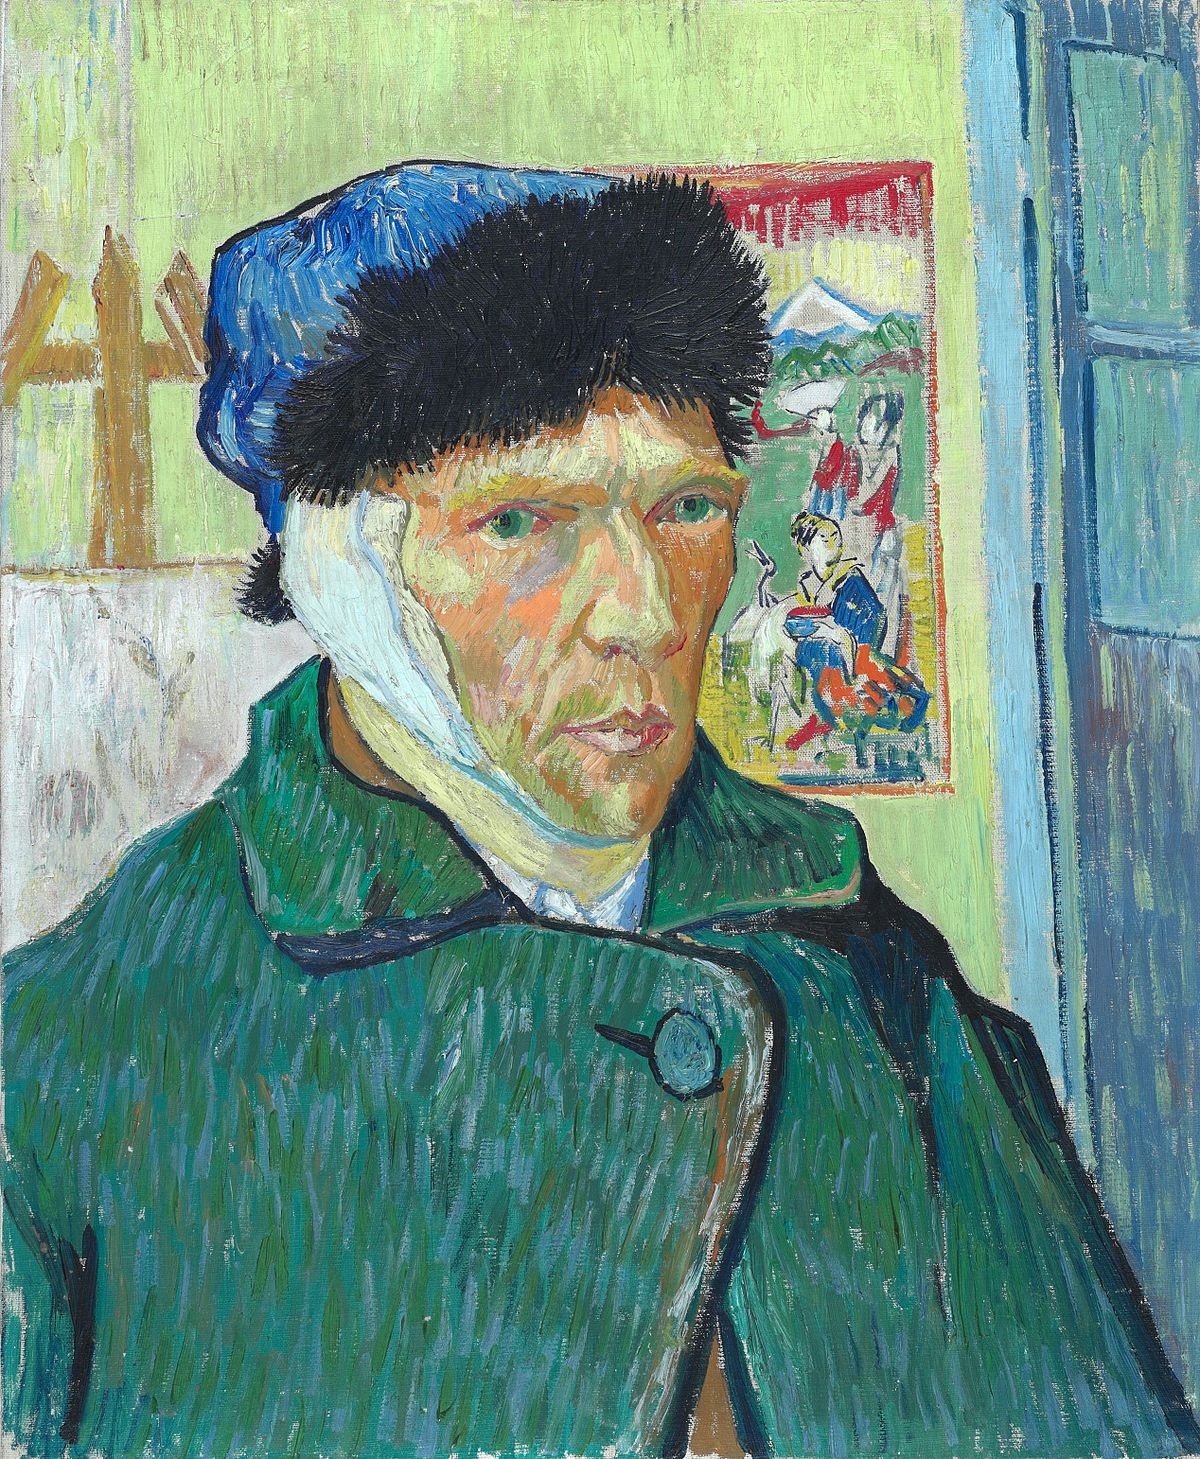 Van Gogh self-portrait (1889) - Wikipedia